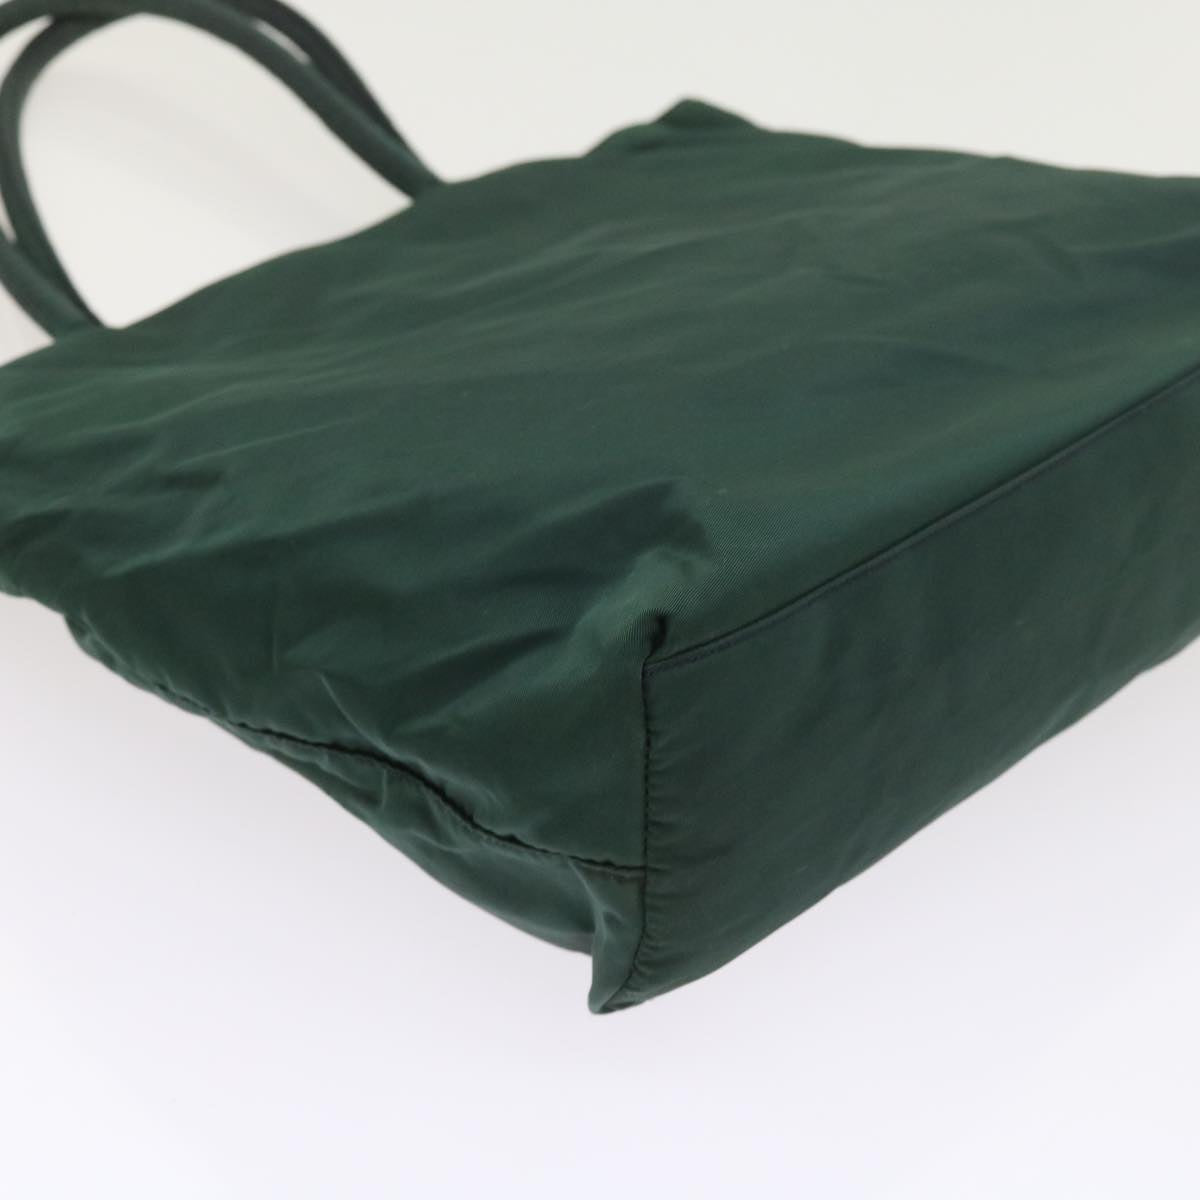 PRADA Hand Bag Nylon Green Auth ac2301